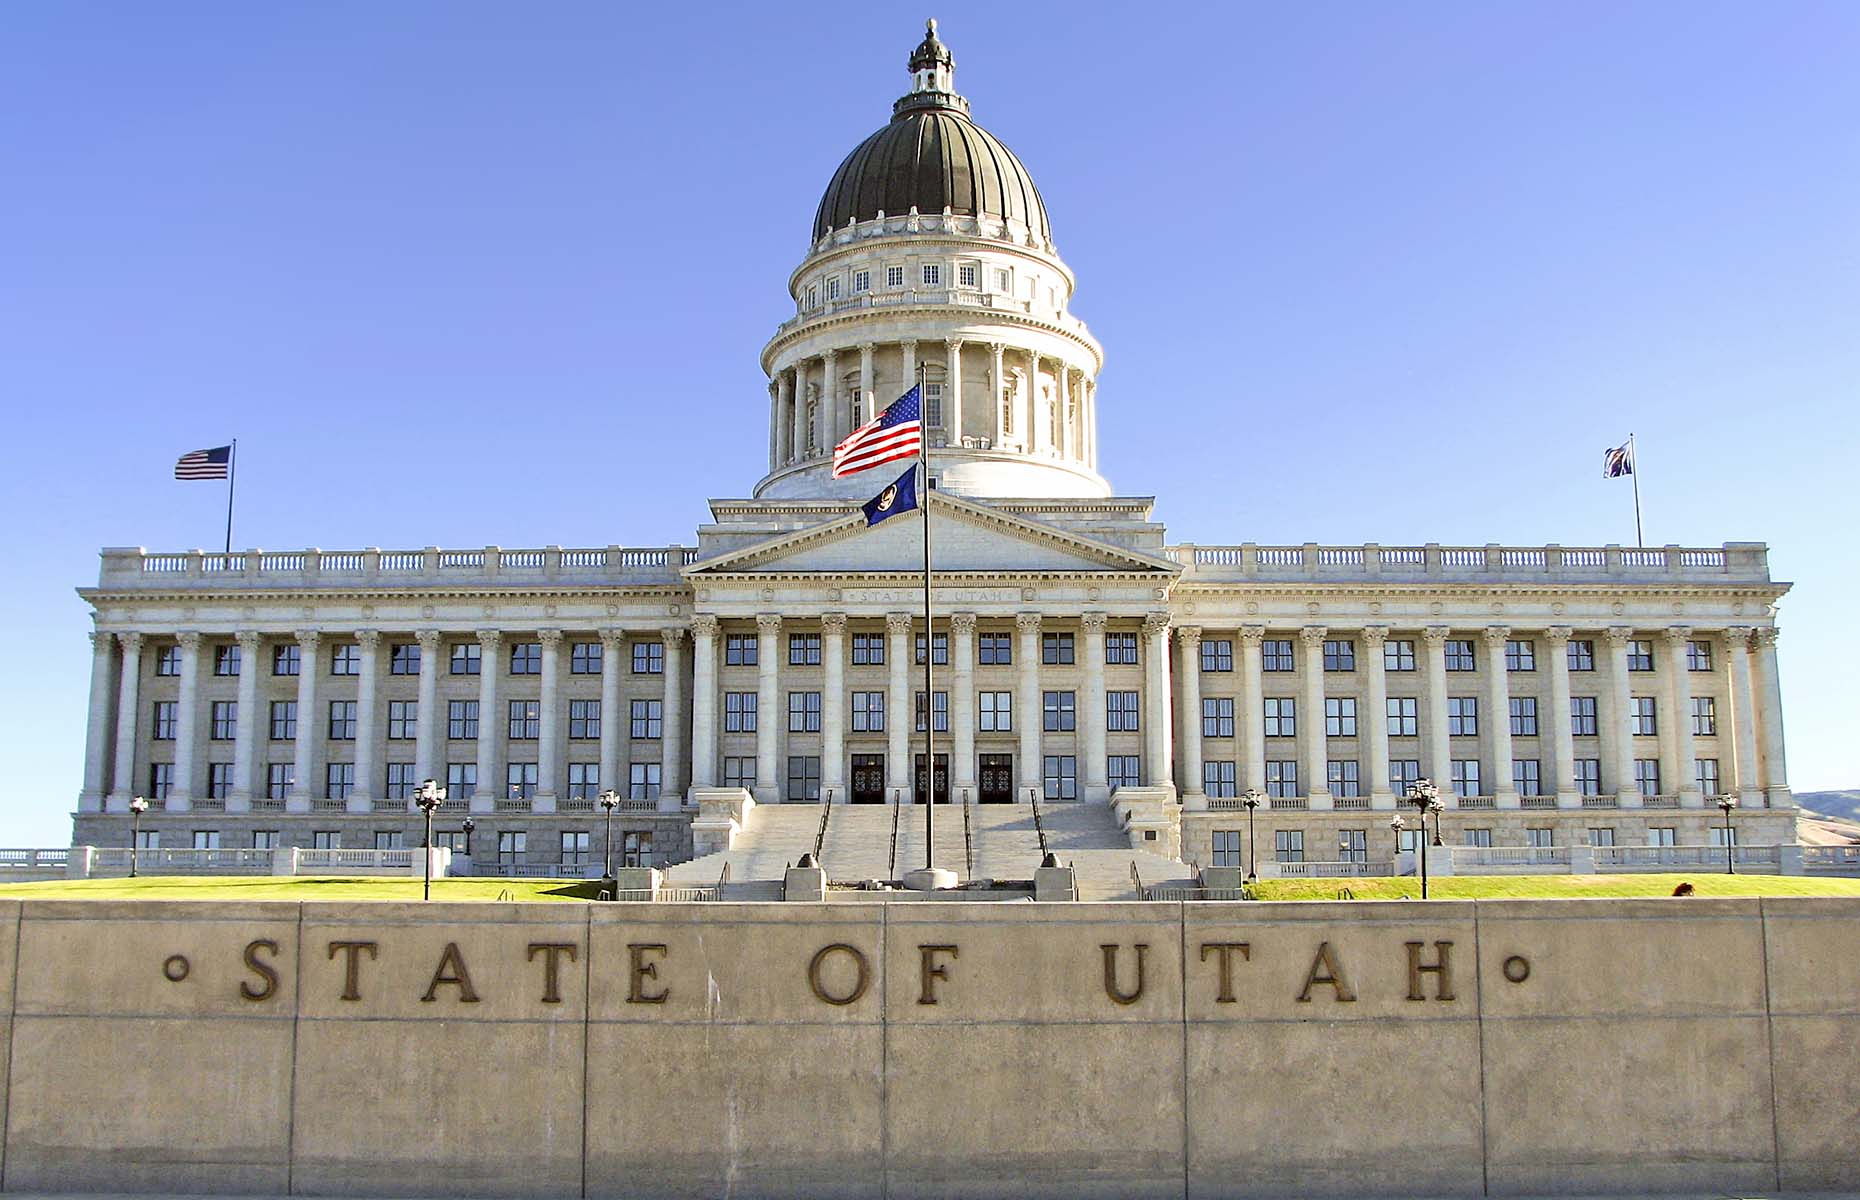 Utah State Capitol, Salt Lake City. (Image: Checco2/Shutterstock)